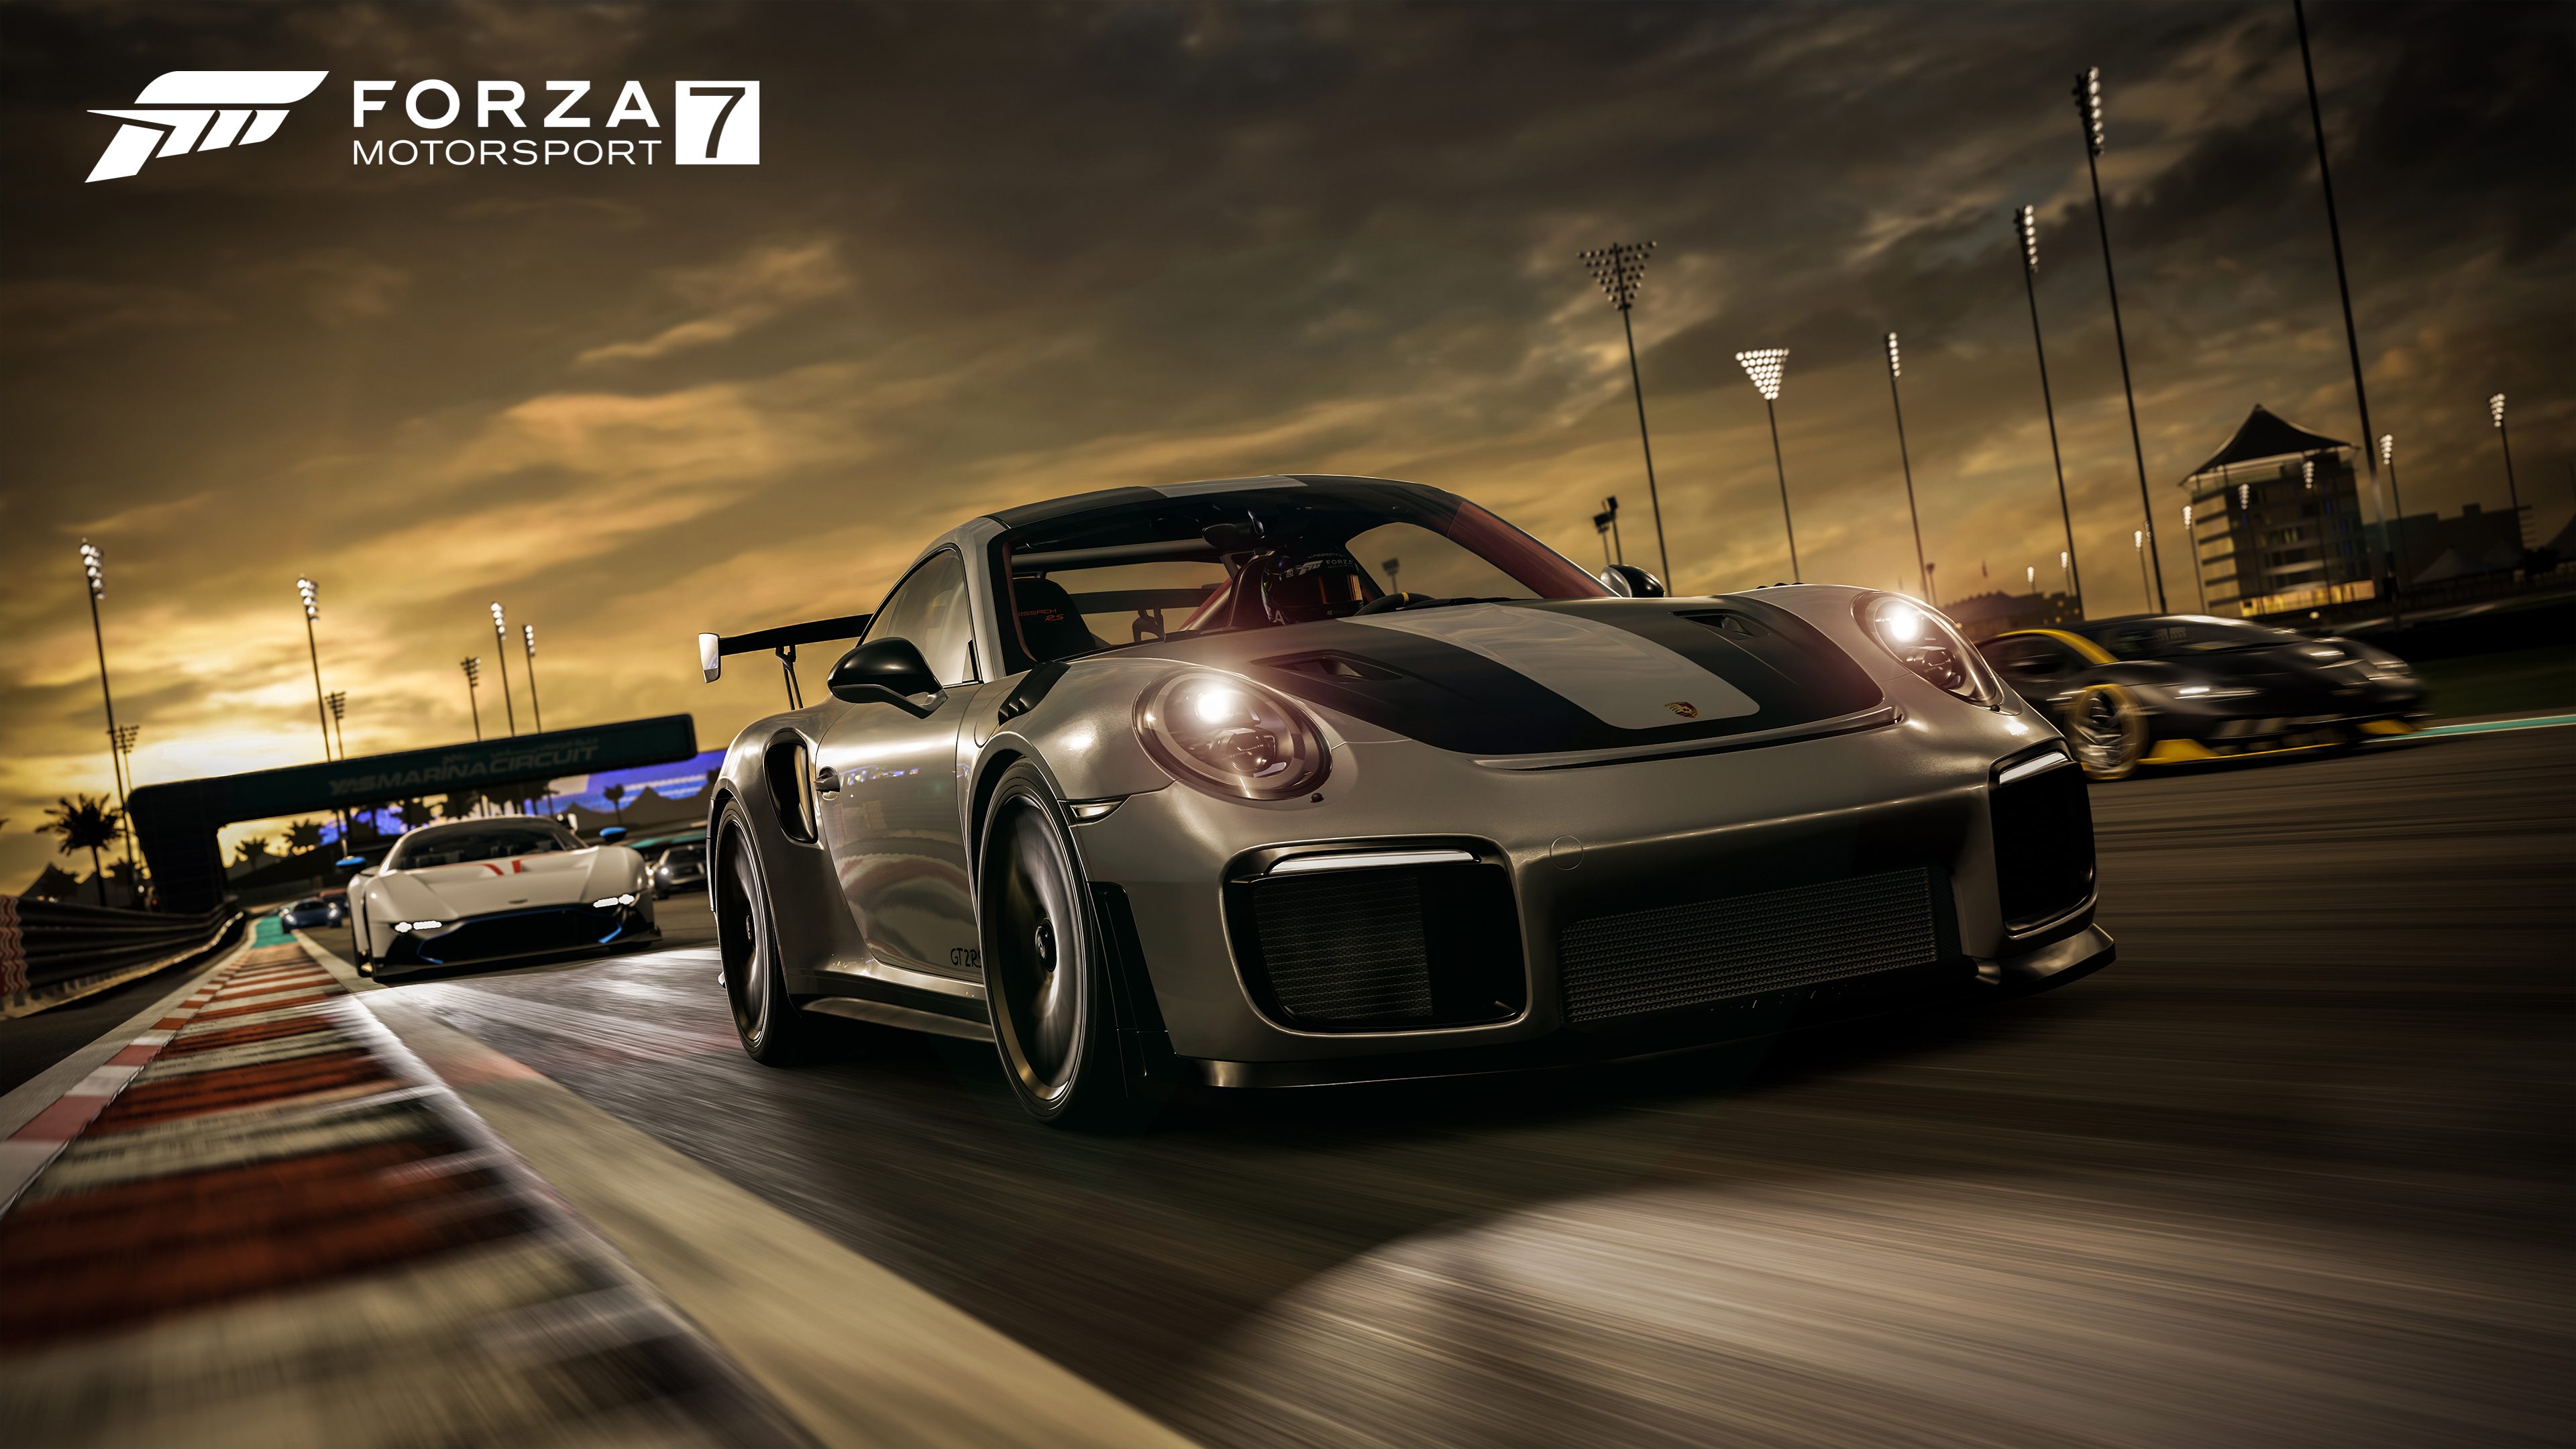 Forza7_Gamescom_PressKit_PorscheInTheLead_4K.jpg